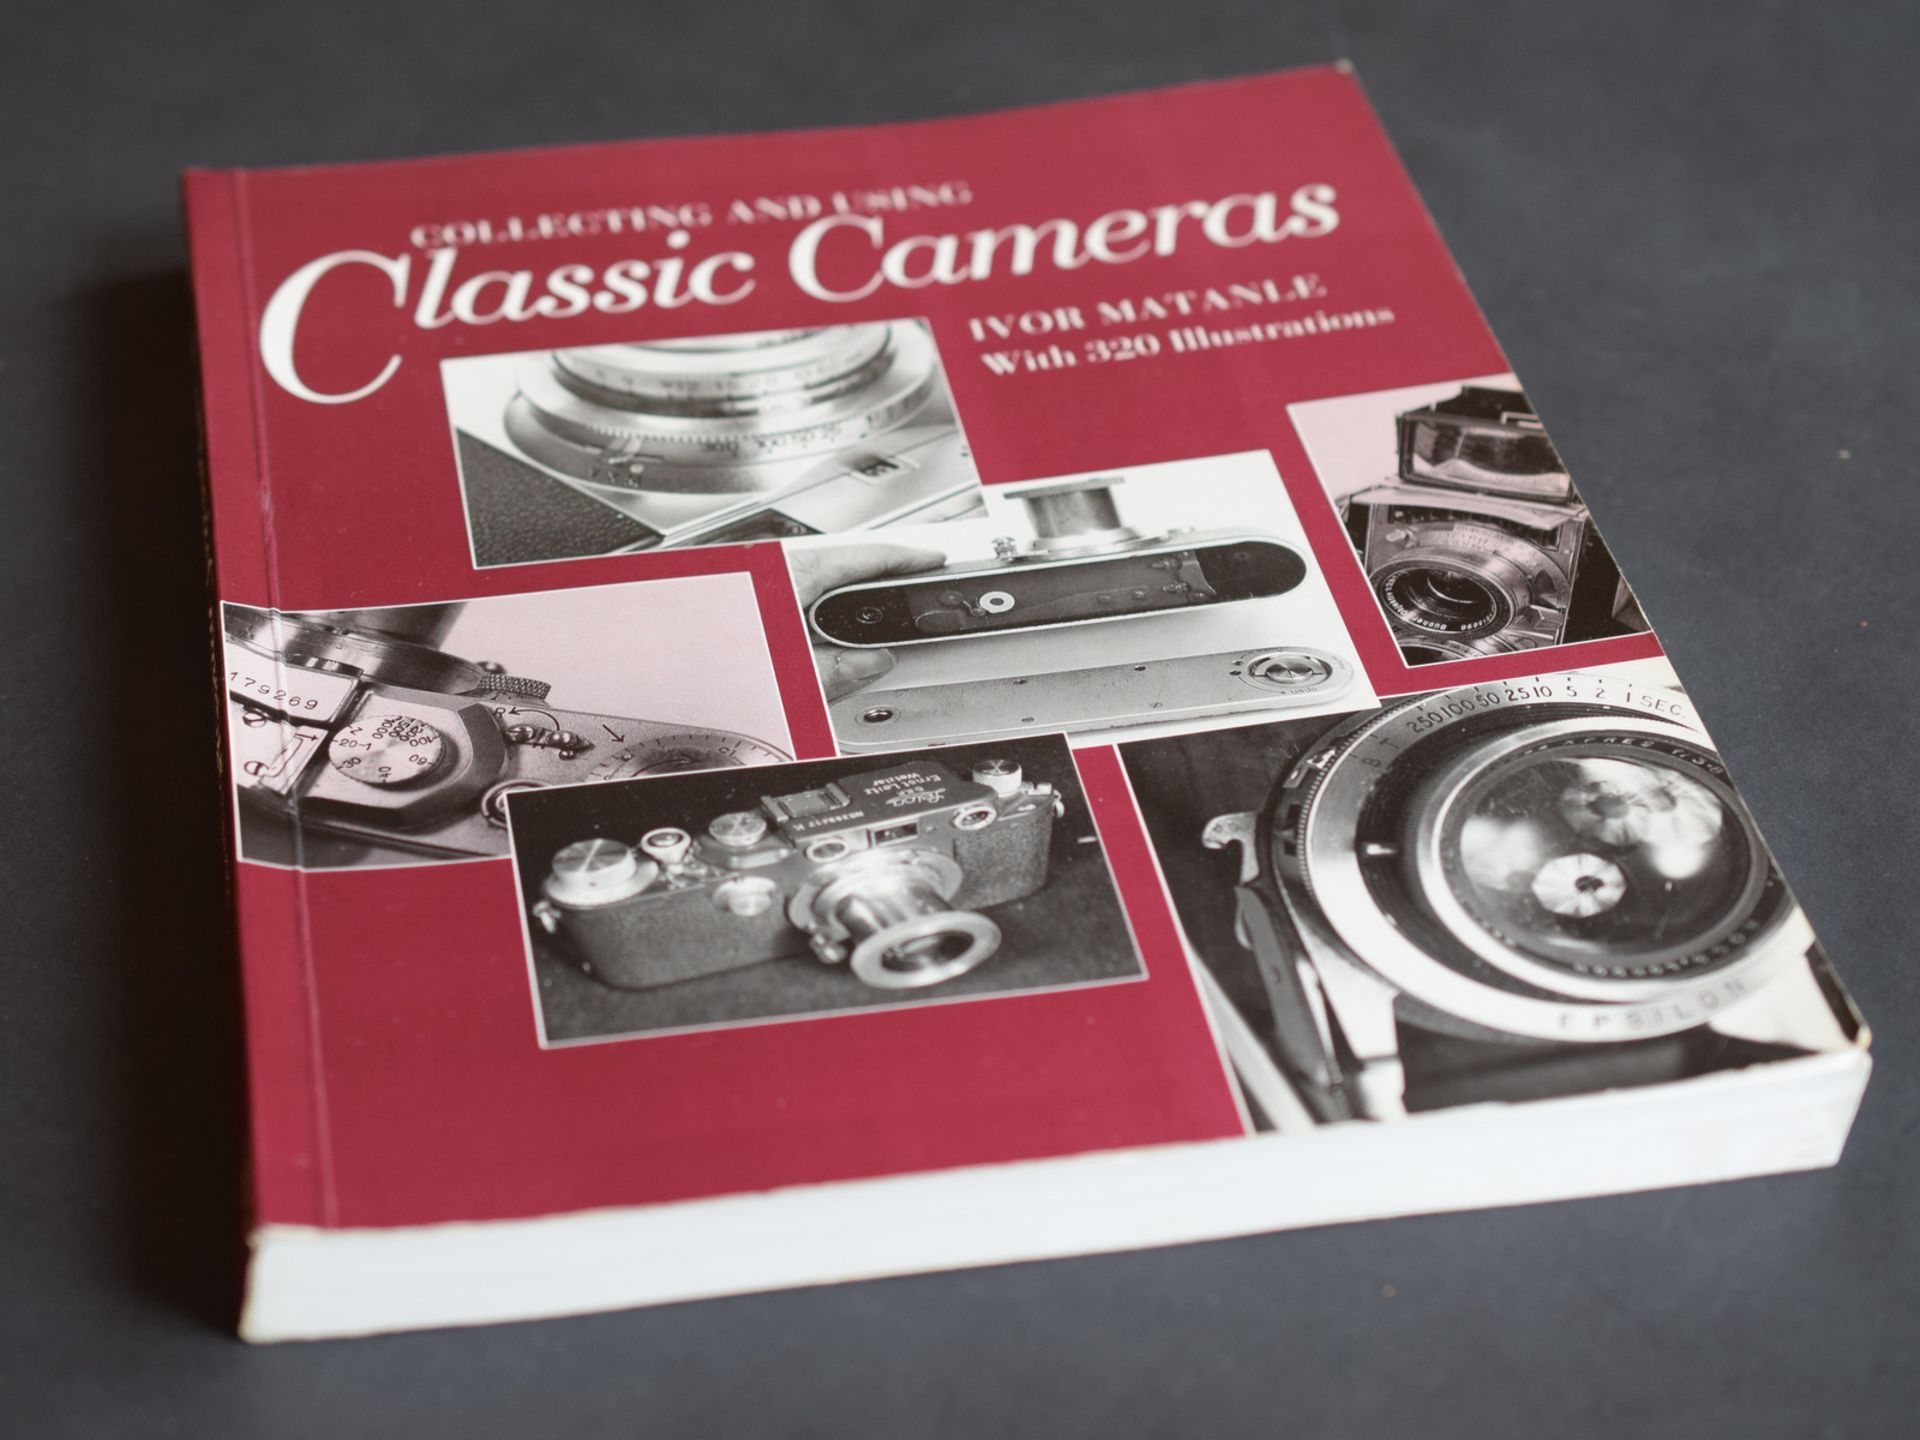 Classic Cameras by Ivor Matanle